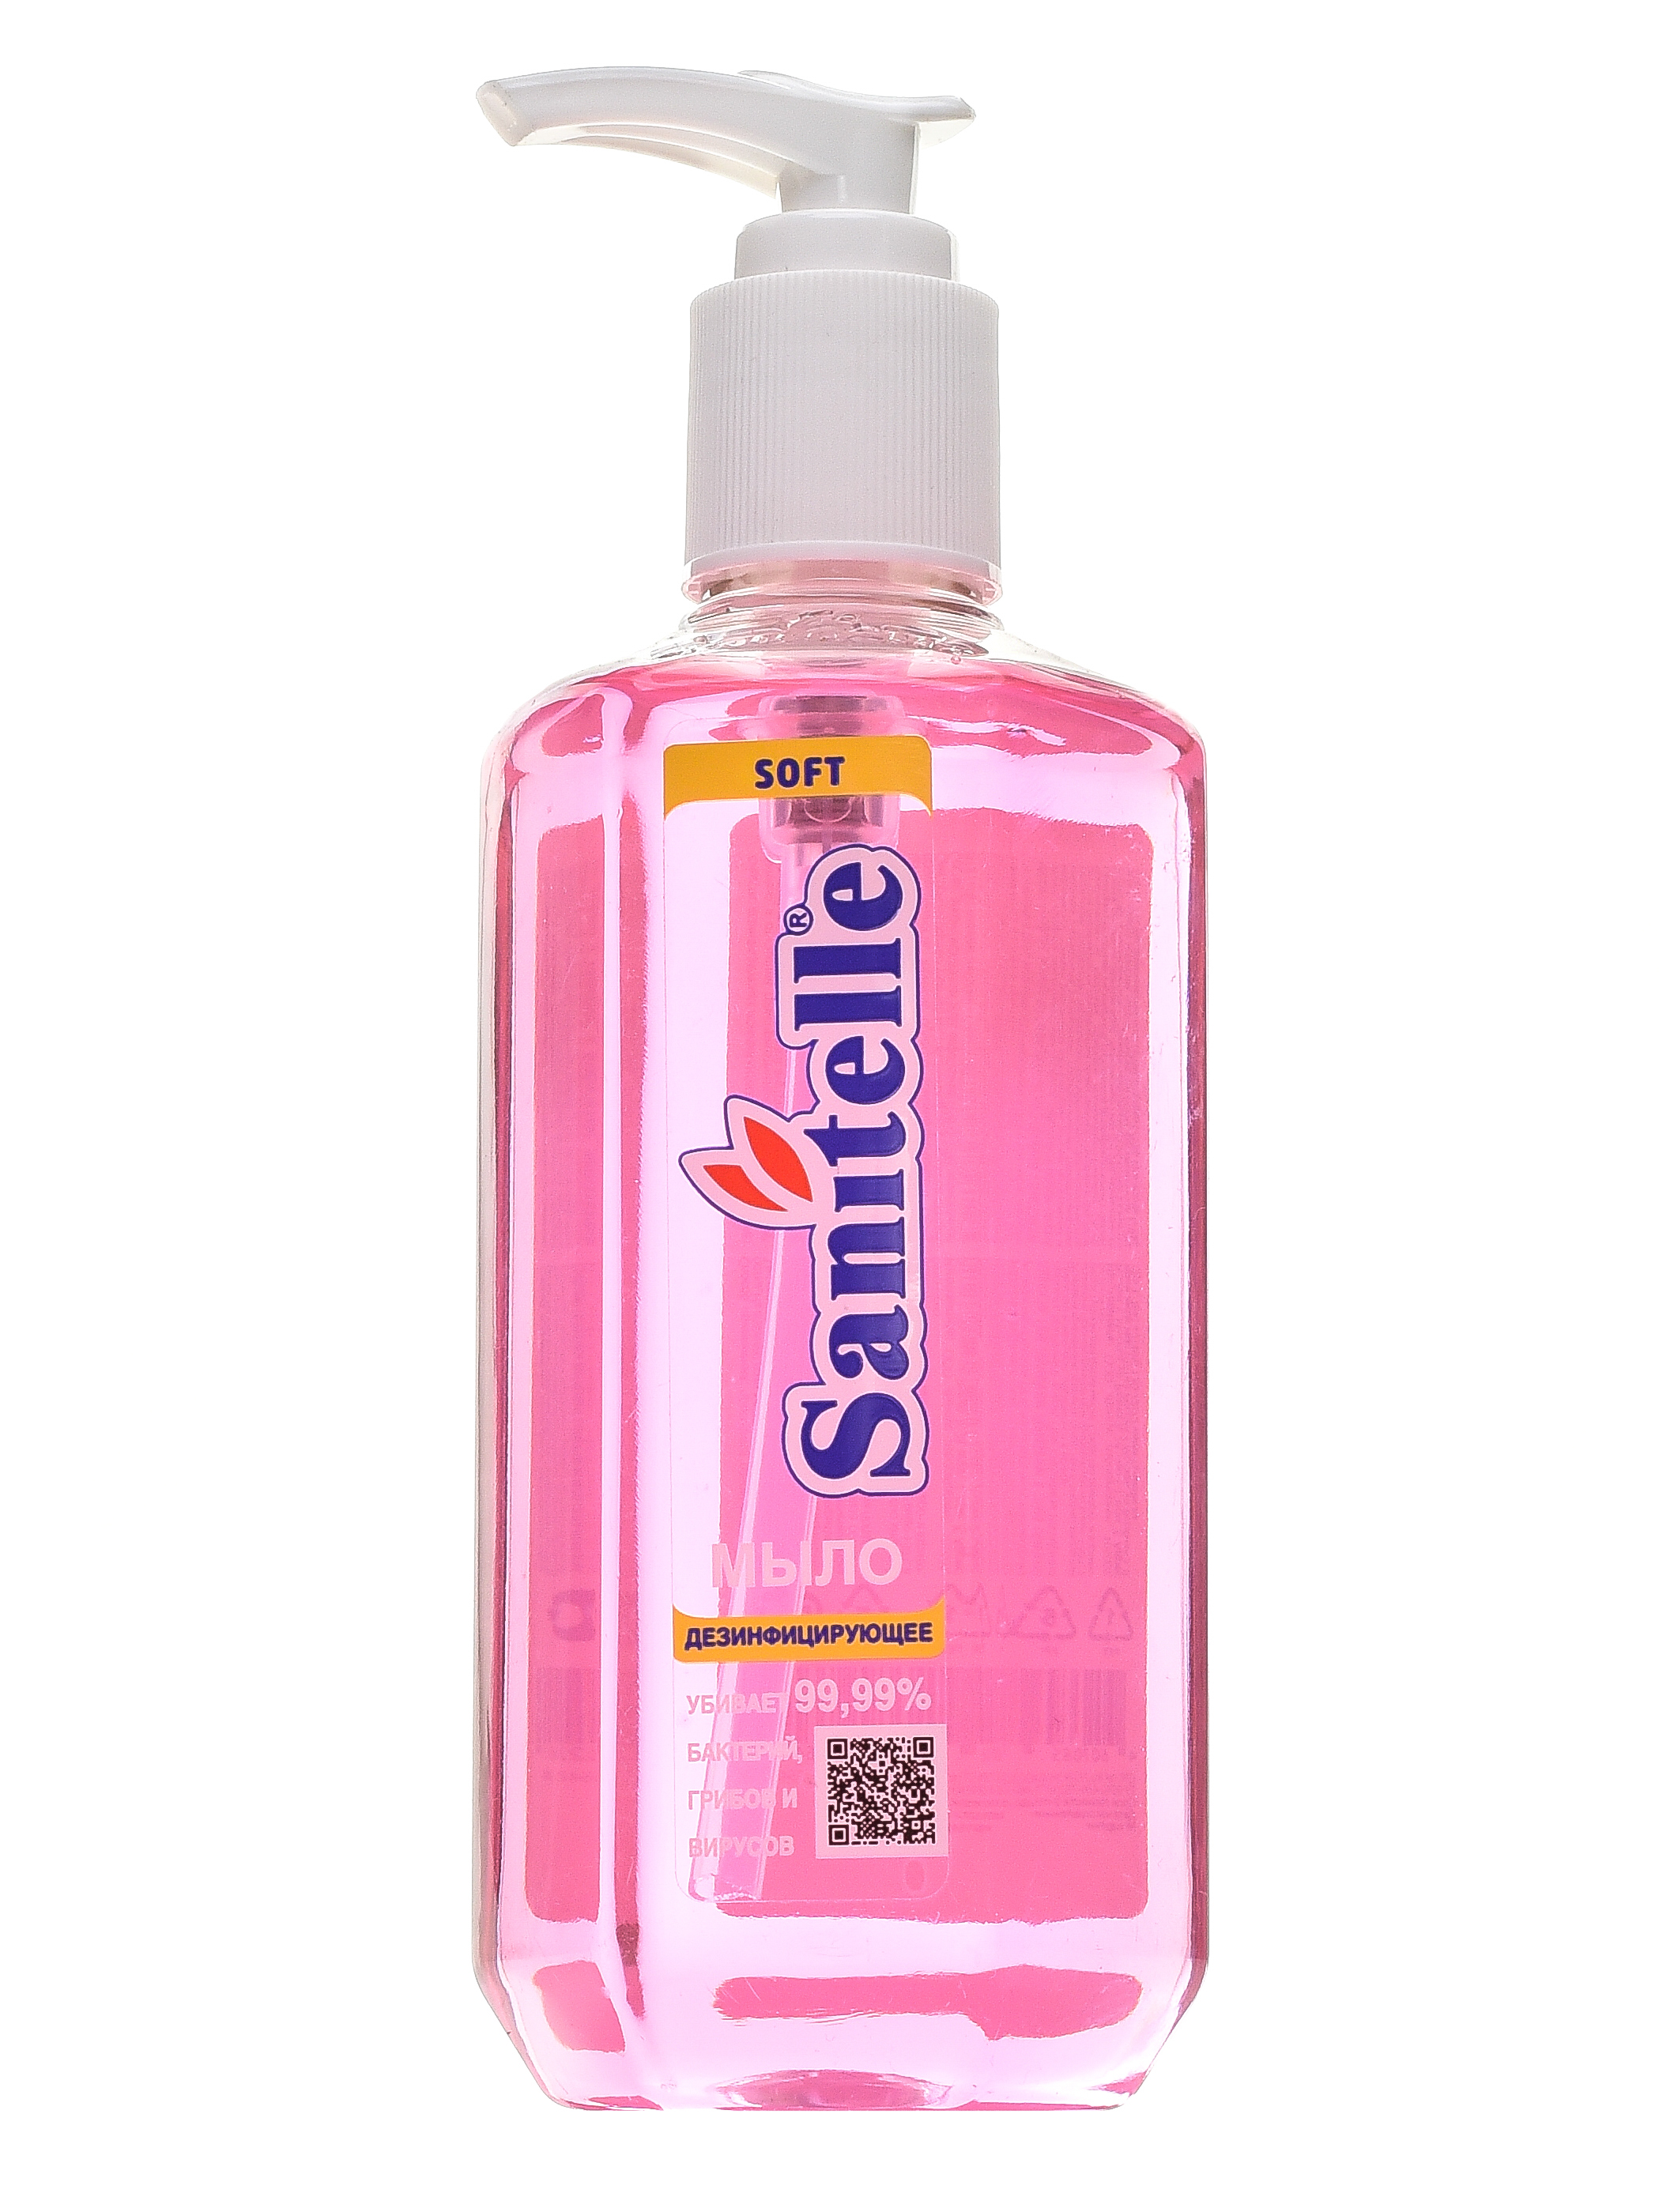 Дезинфицирующее мыло Sanitelle SOFT, 300 мл./ 0300-Д-S-S